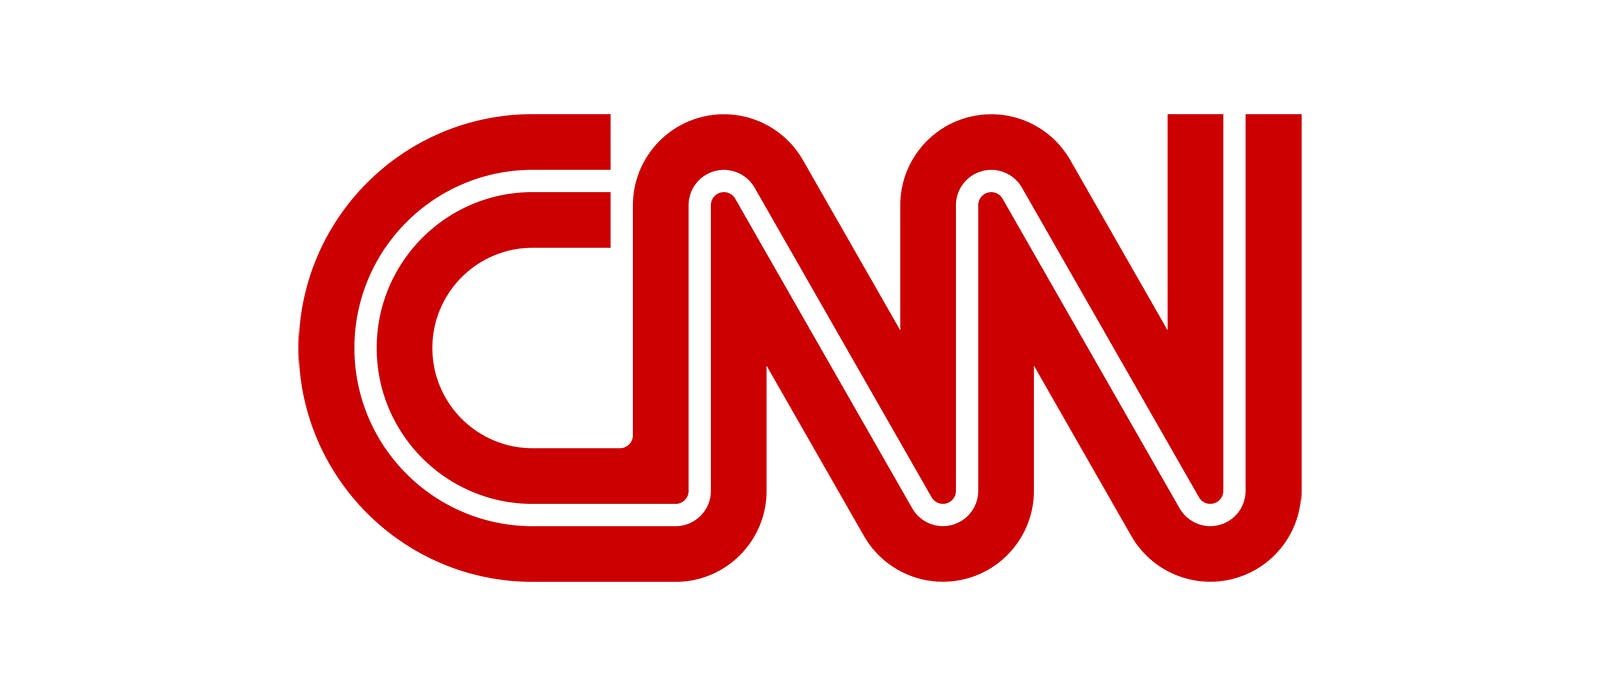 CNN's logo